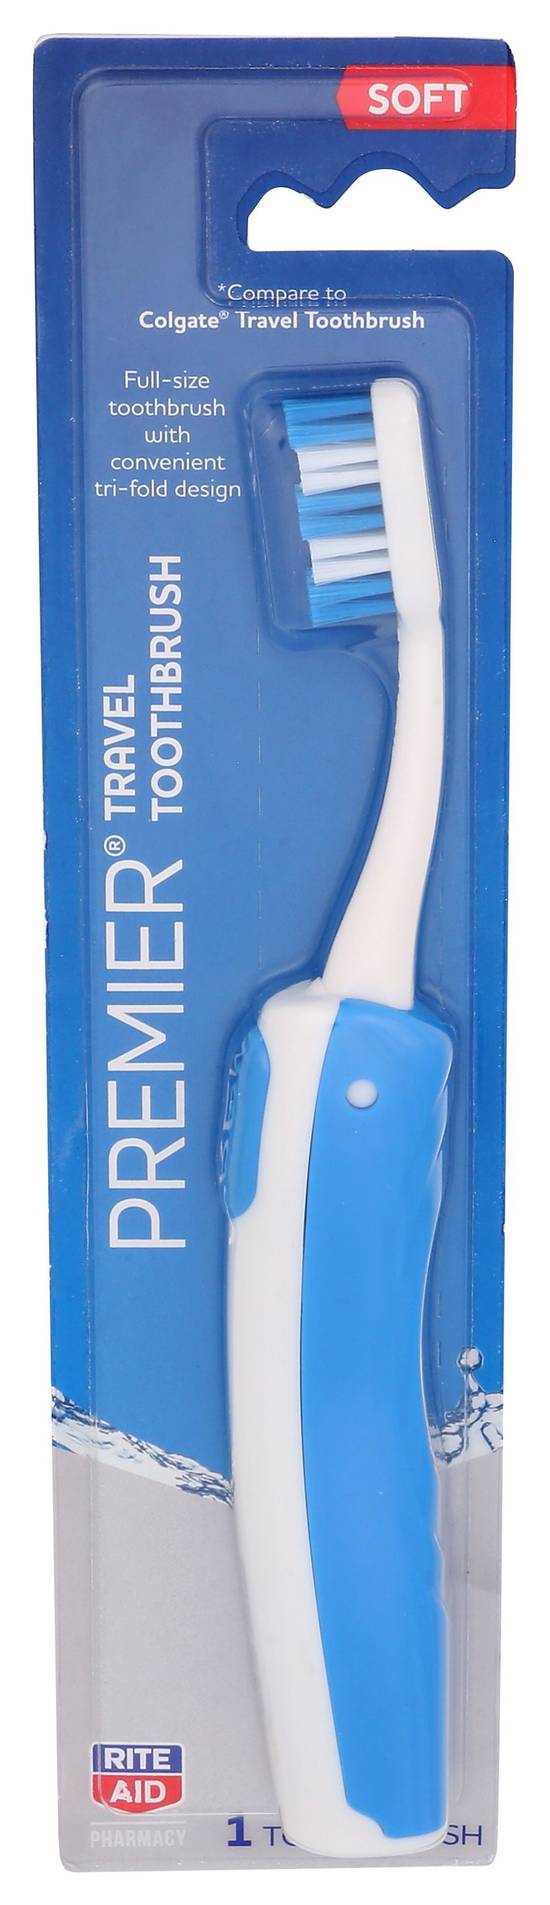 Rite Aid Premier Travel Toothbrush